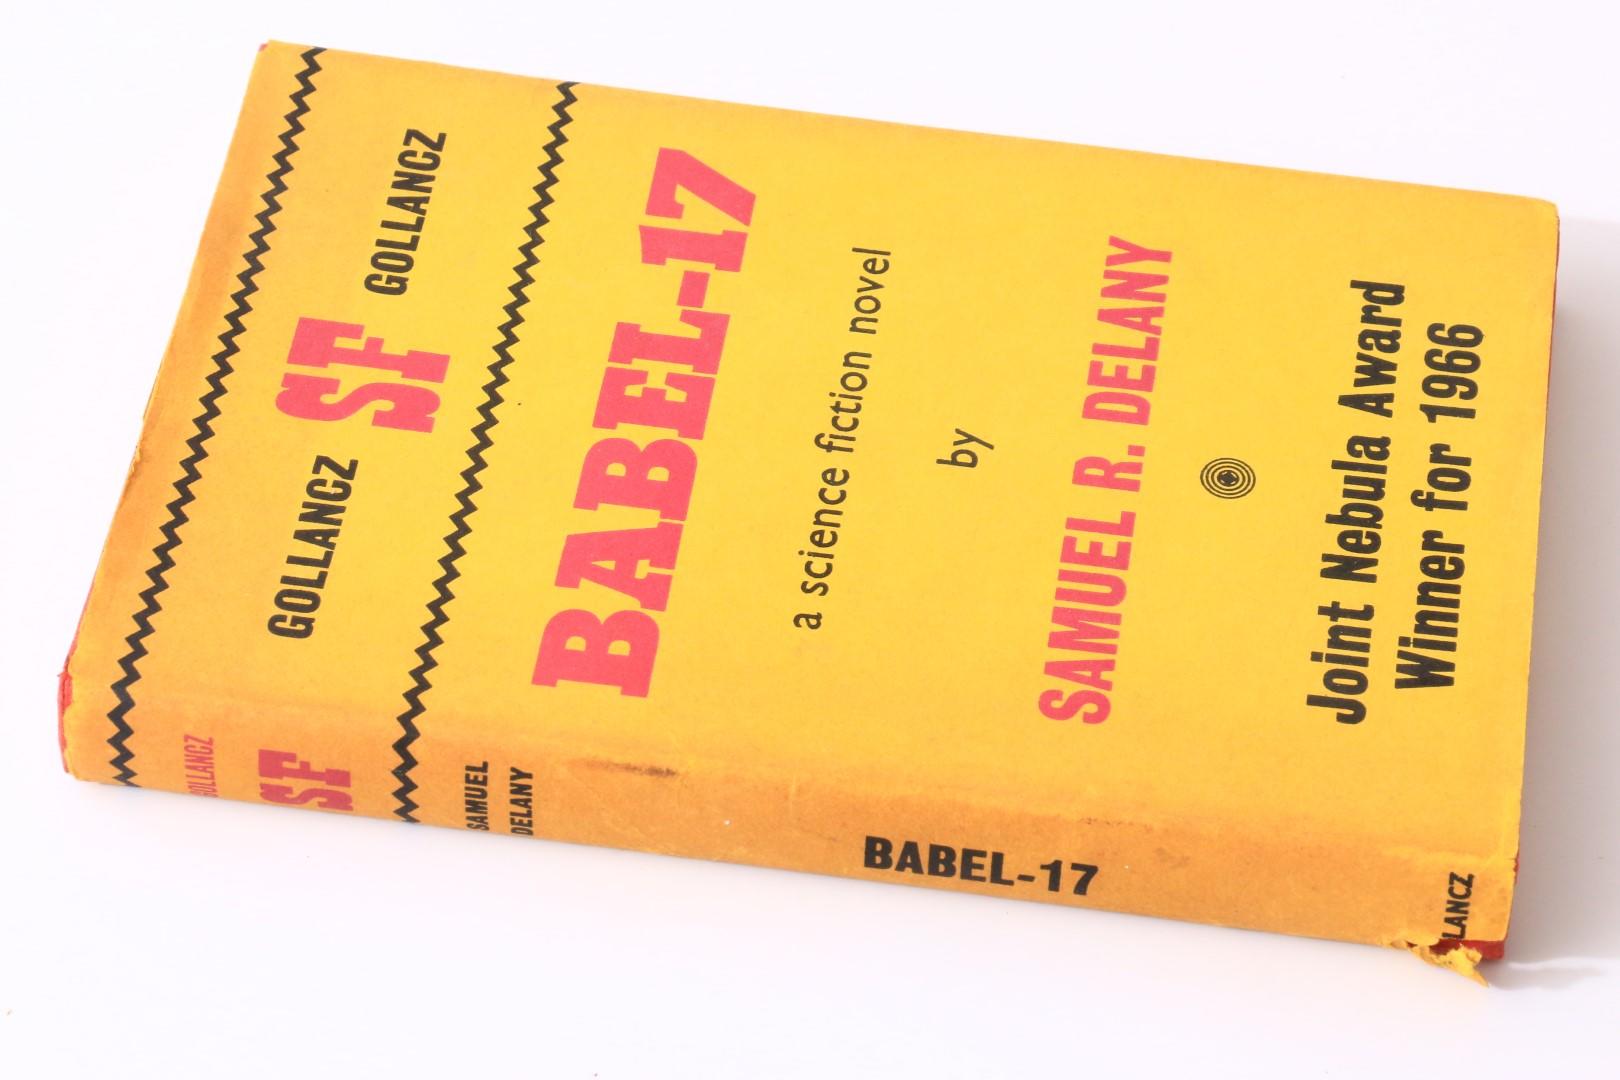 Samuel Delany - Babel-17 - Gollancz, 1967, First Edition.